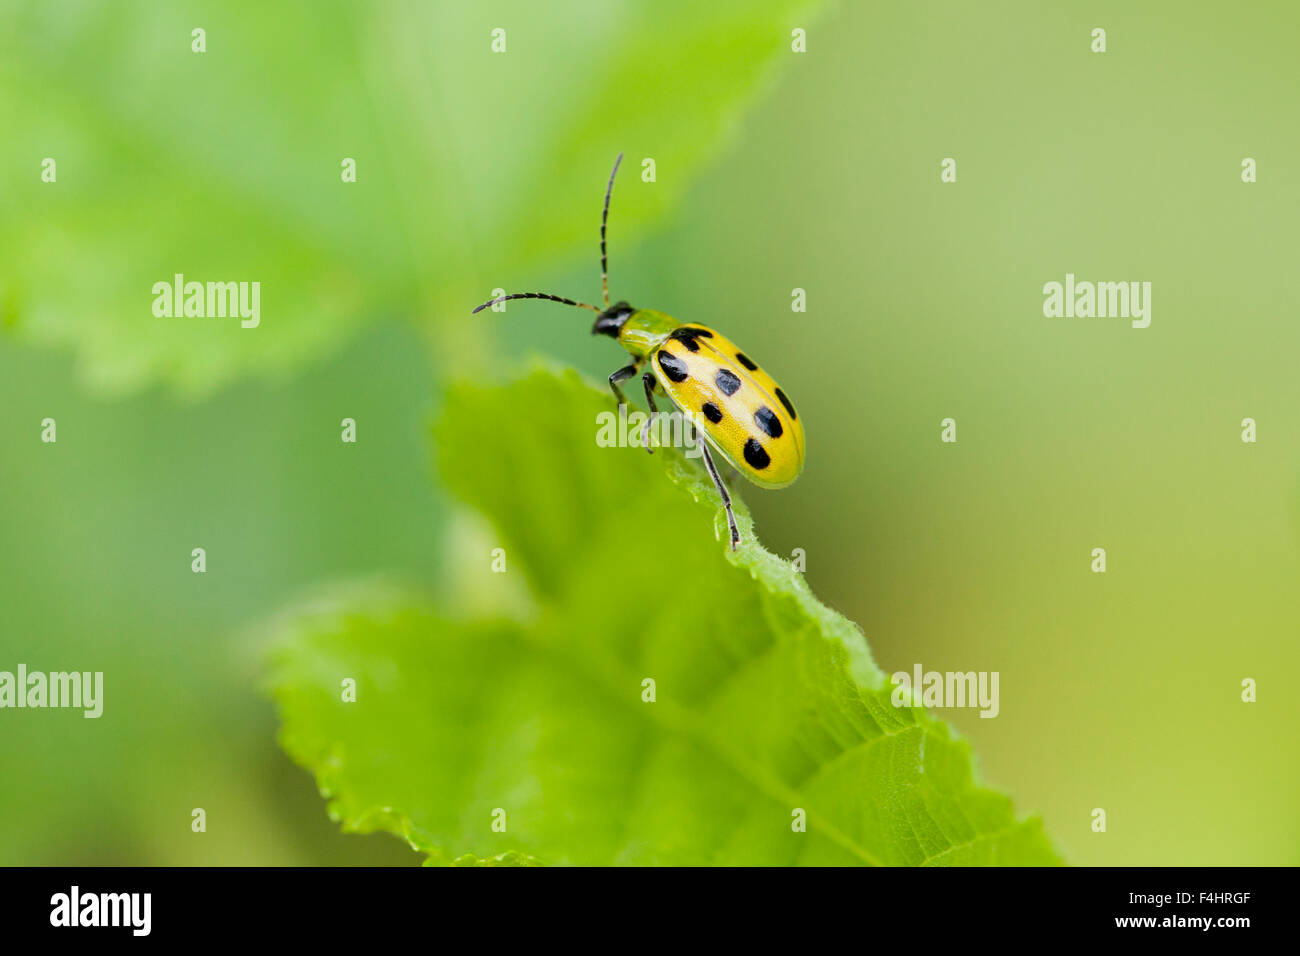 Spotted cucumber beetle (Diabrotica undecimpunctata) - USA Stock Photo